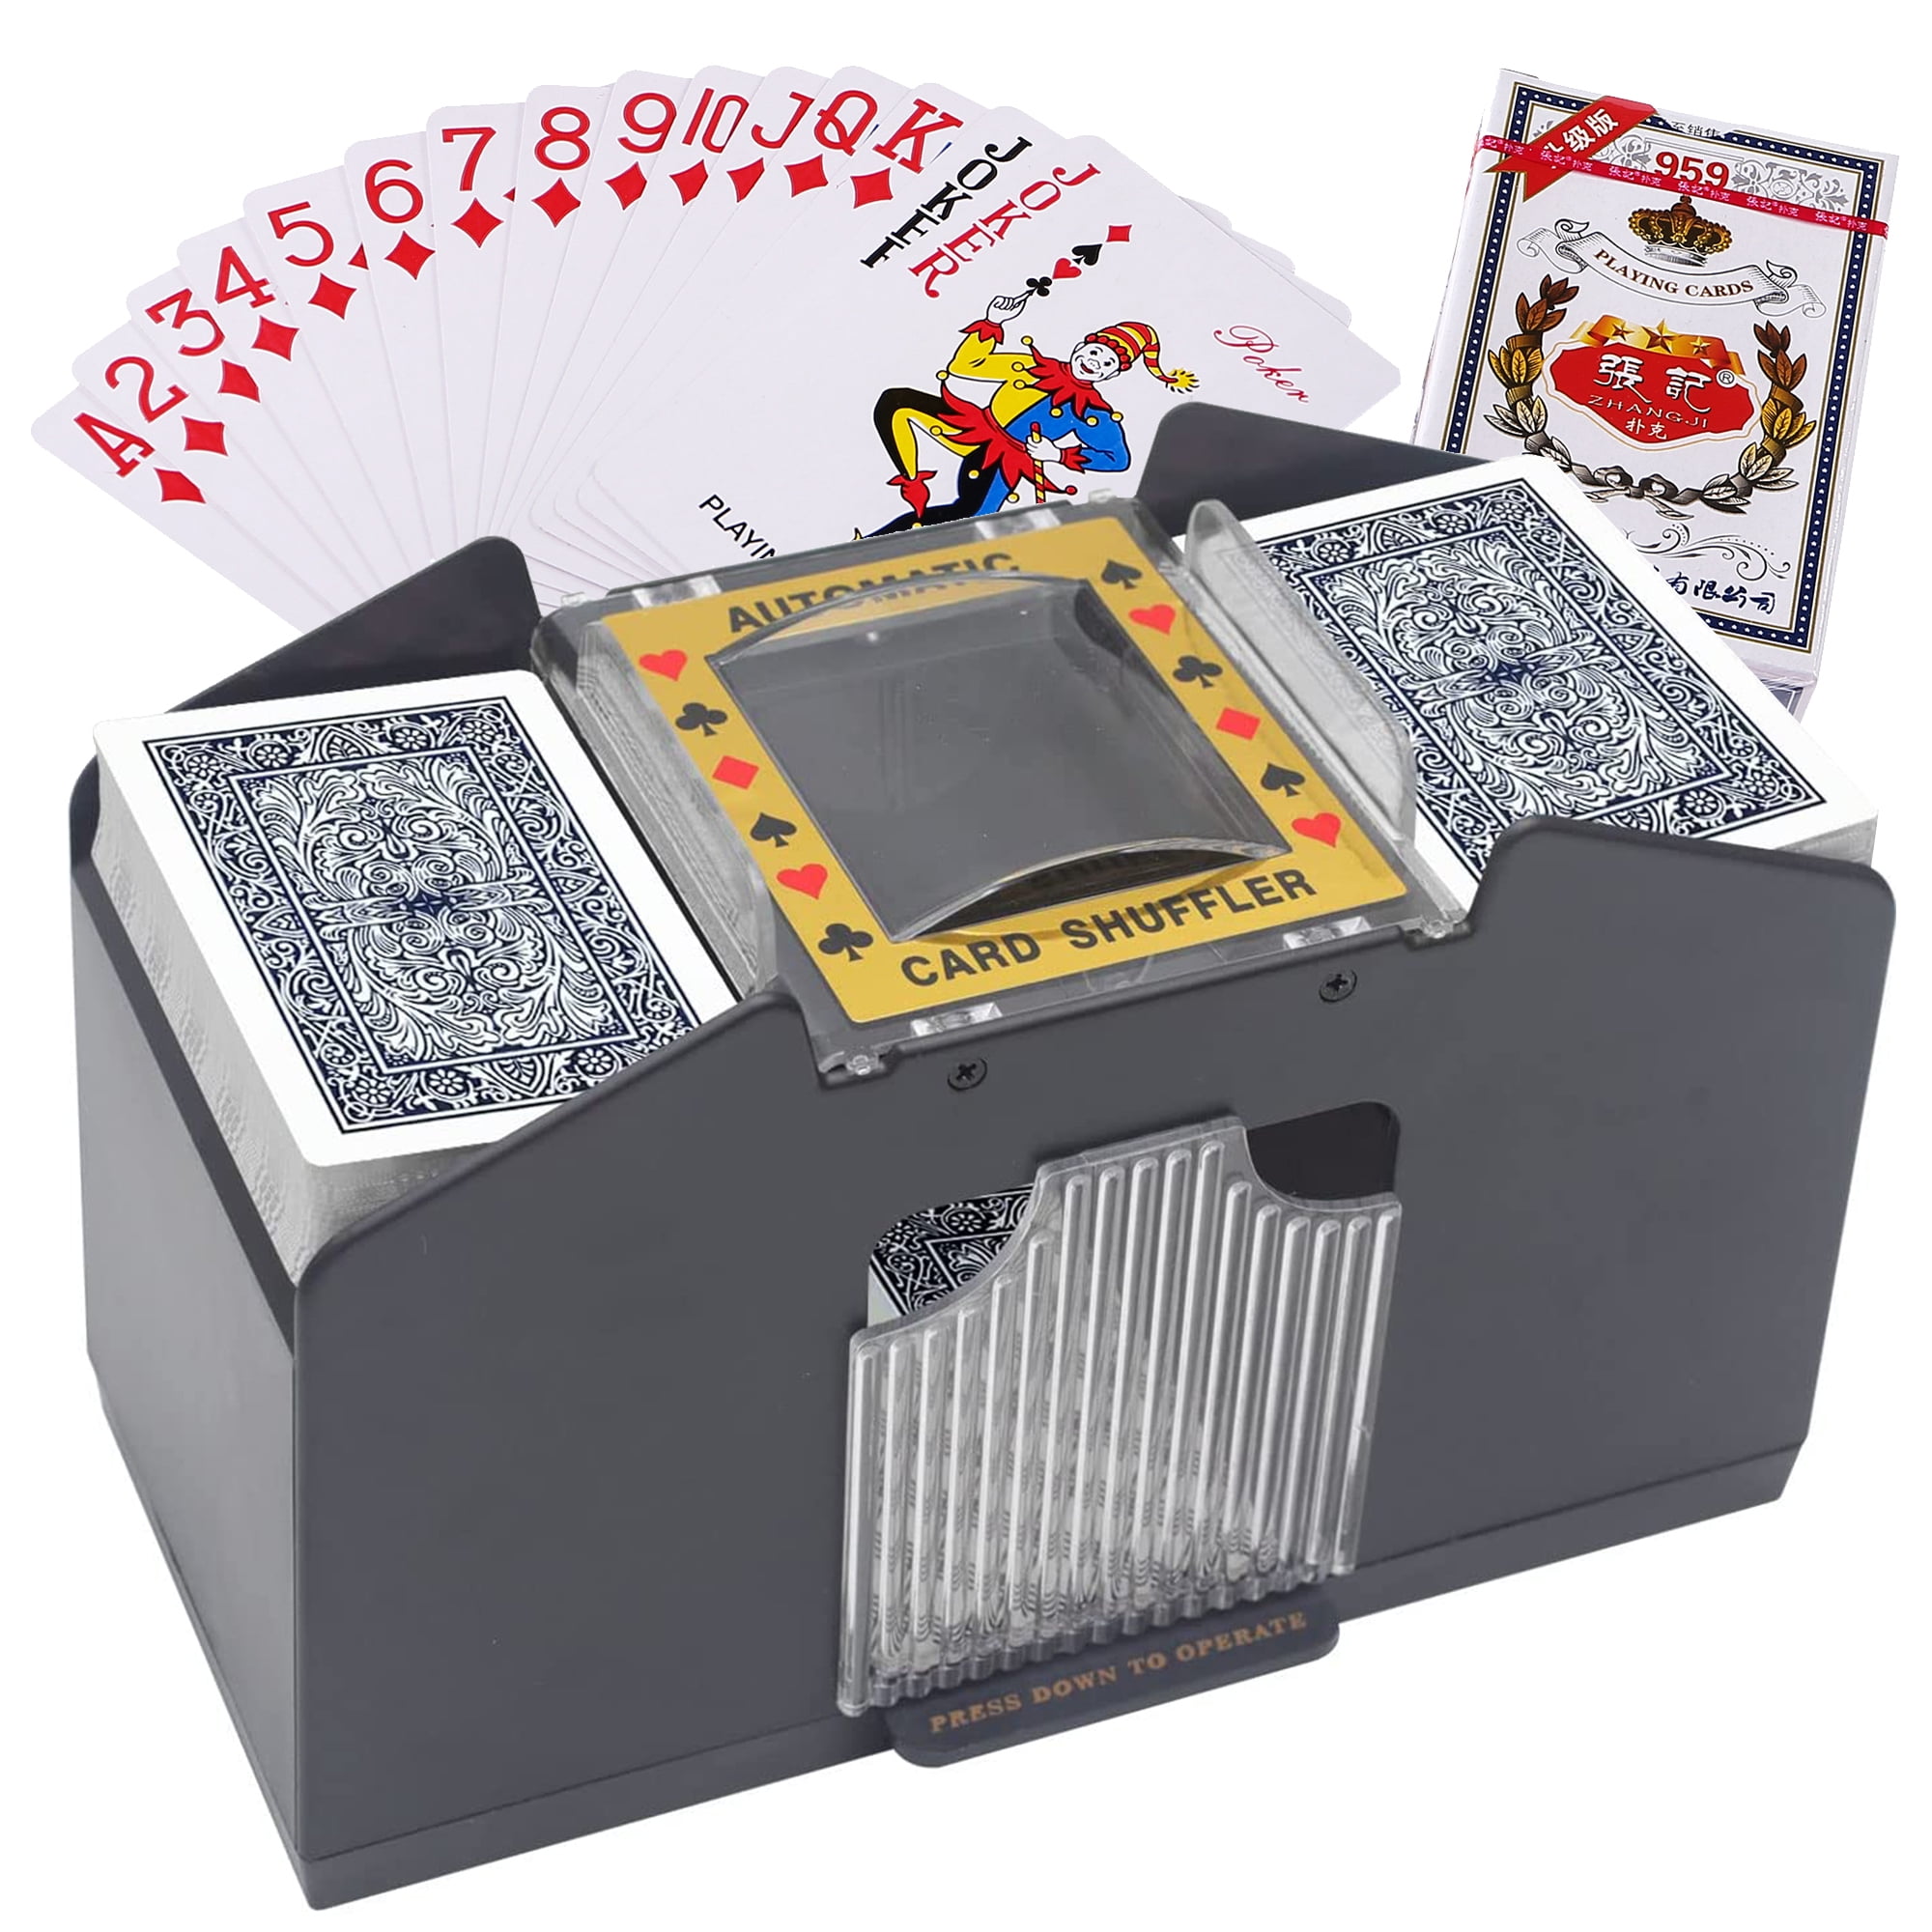 Sturdy for Elderly Entertainment Adult Outdoor ABS AutomaticCard Shuffler 2-Deck Card Shuffler 